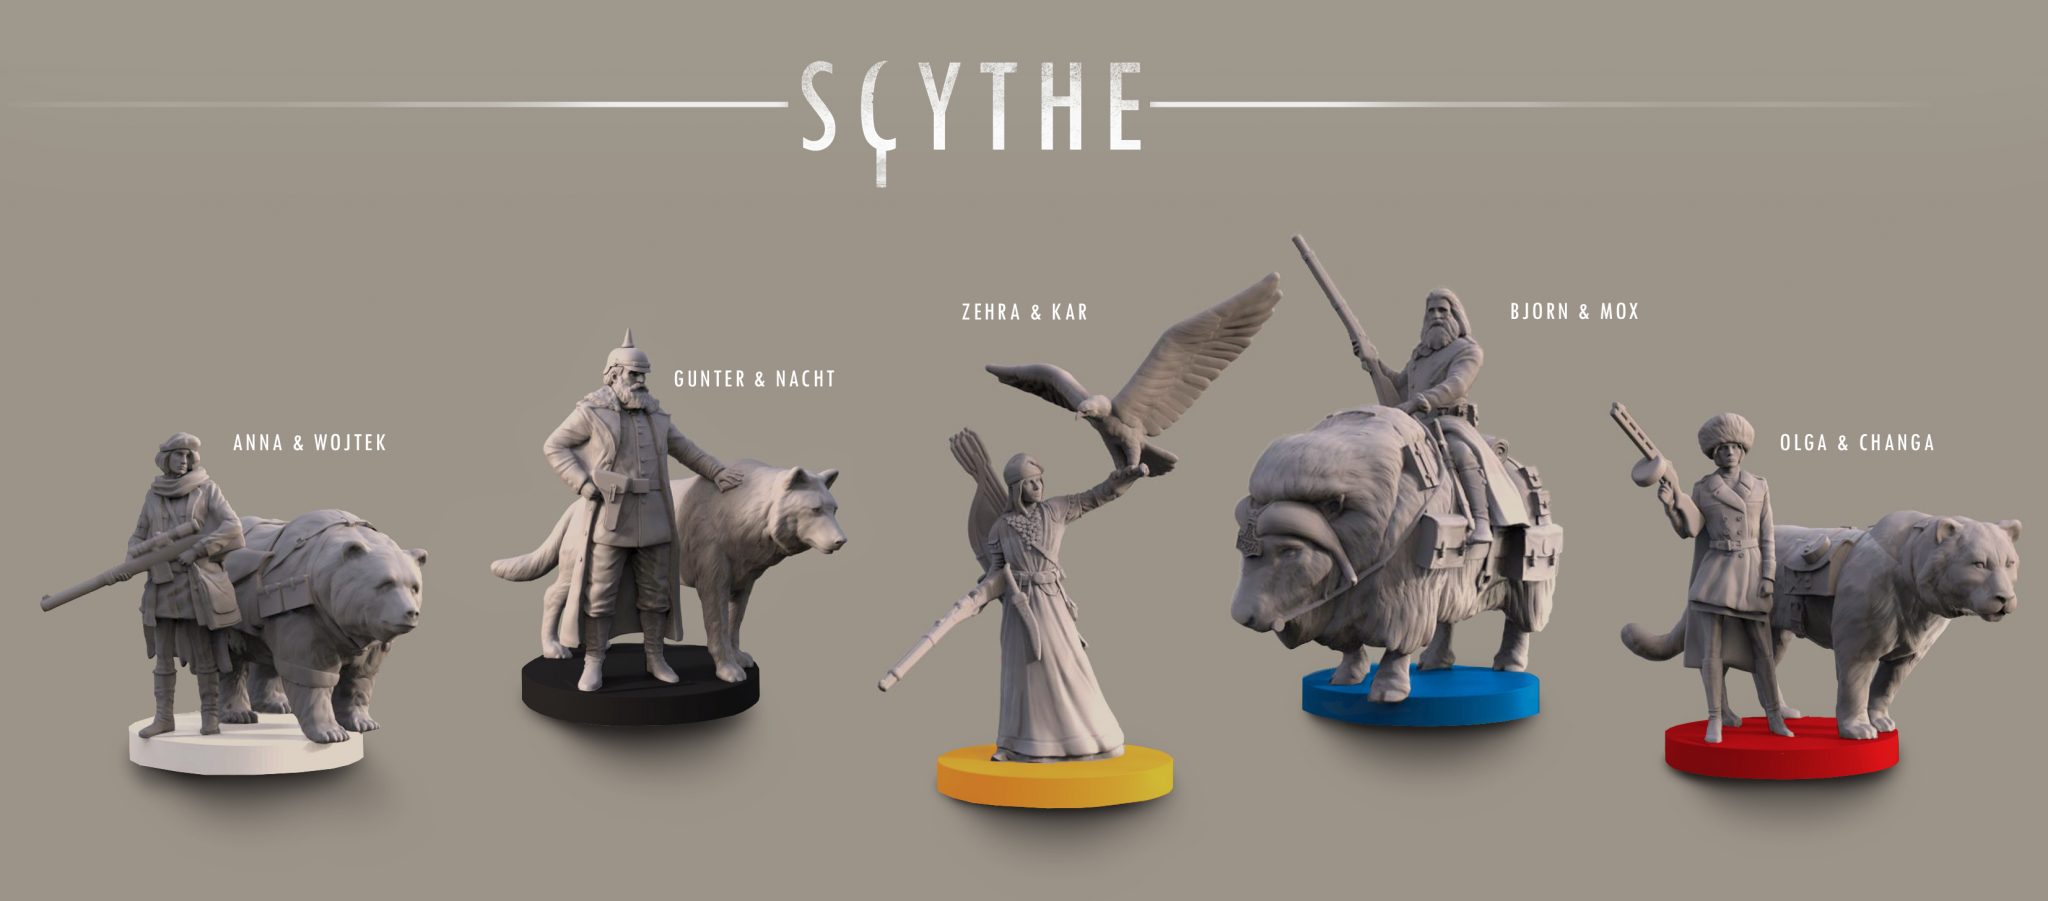 Présentation du jeu Scythe offert chez LilloJEUX